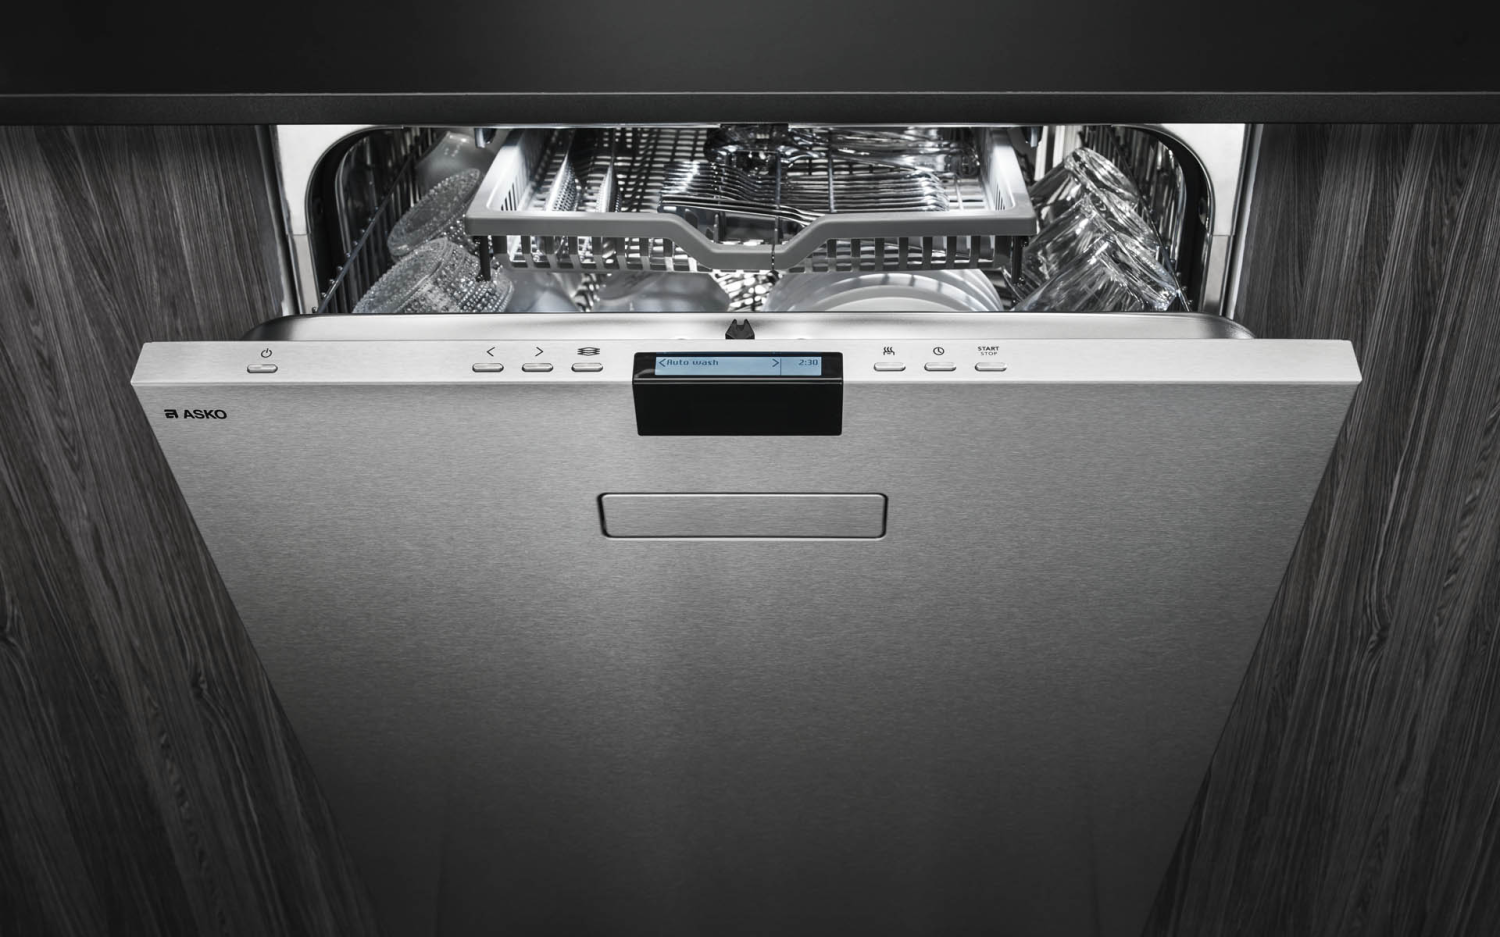 Dishwasher перевод. Посудомоечная машина Asko d 5436 s. Посудомоечная машина Asko d 5436 w. Dfi644b/1 посудомоечная машина Asko. Отдельностоящая посудомоечная машина Asko dfs244ib.s/1.